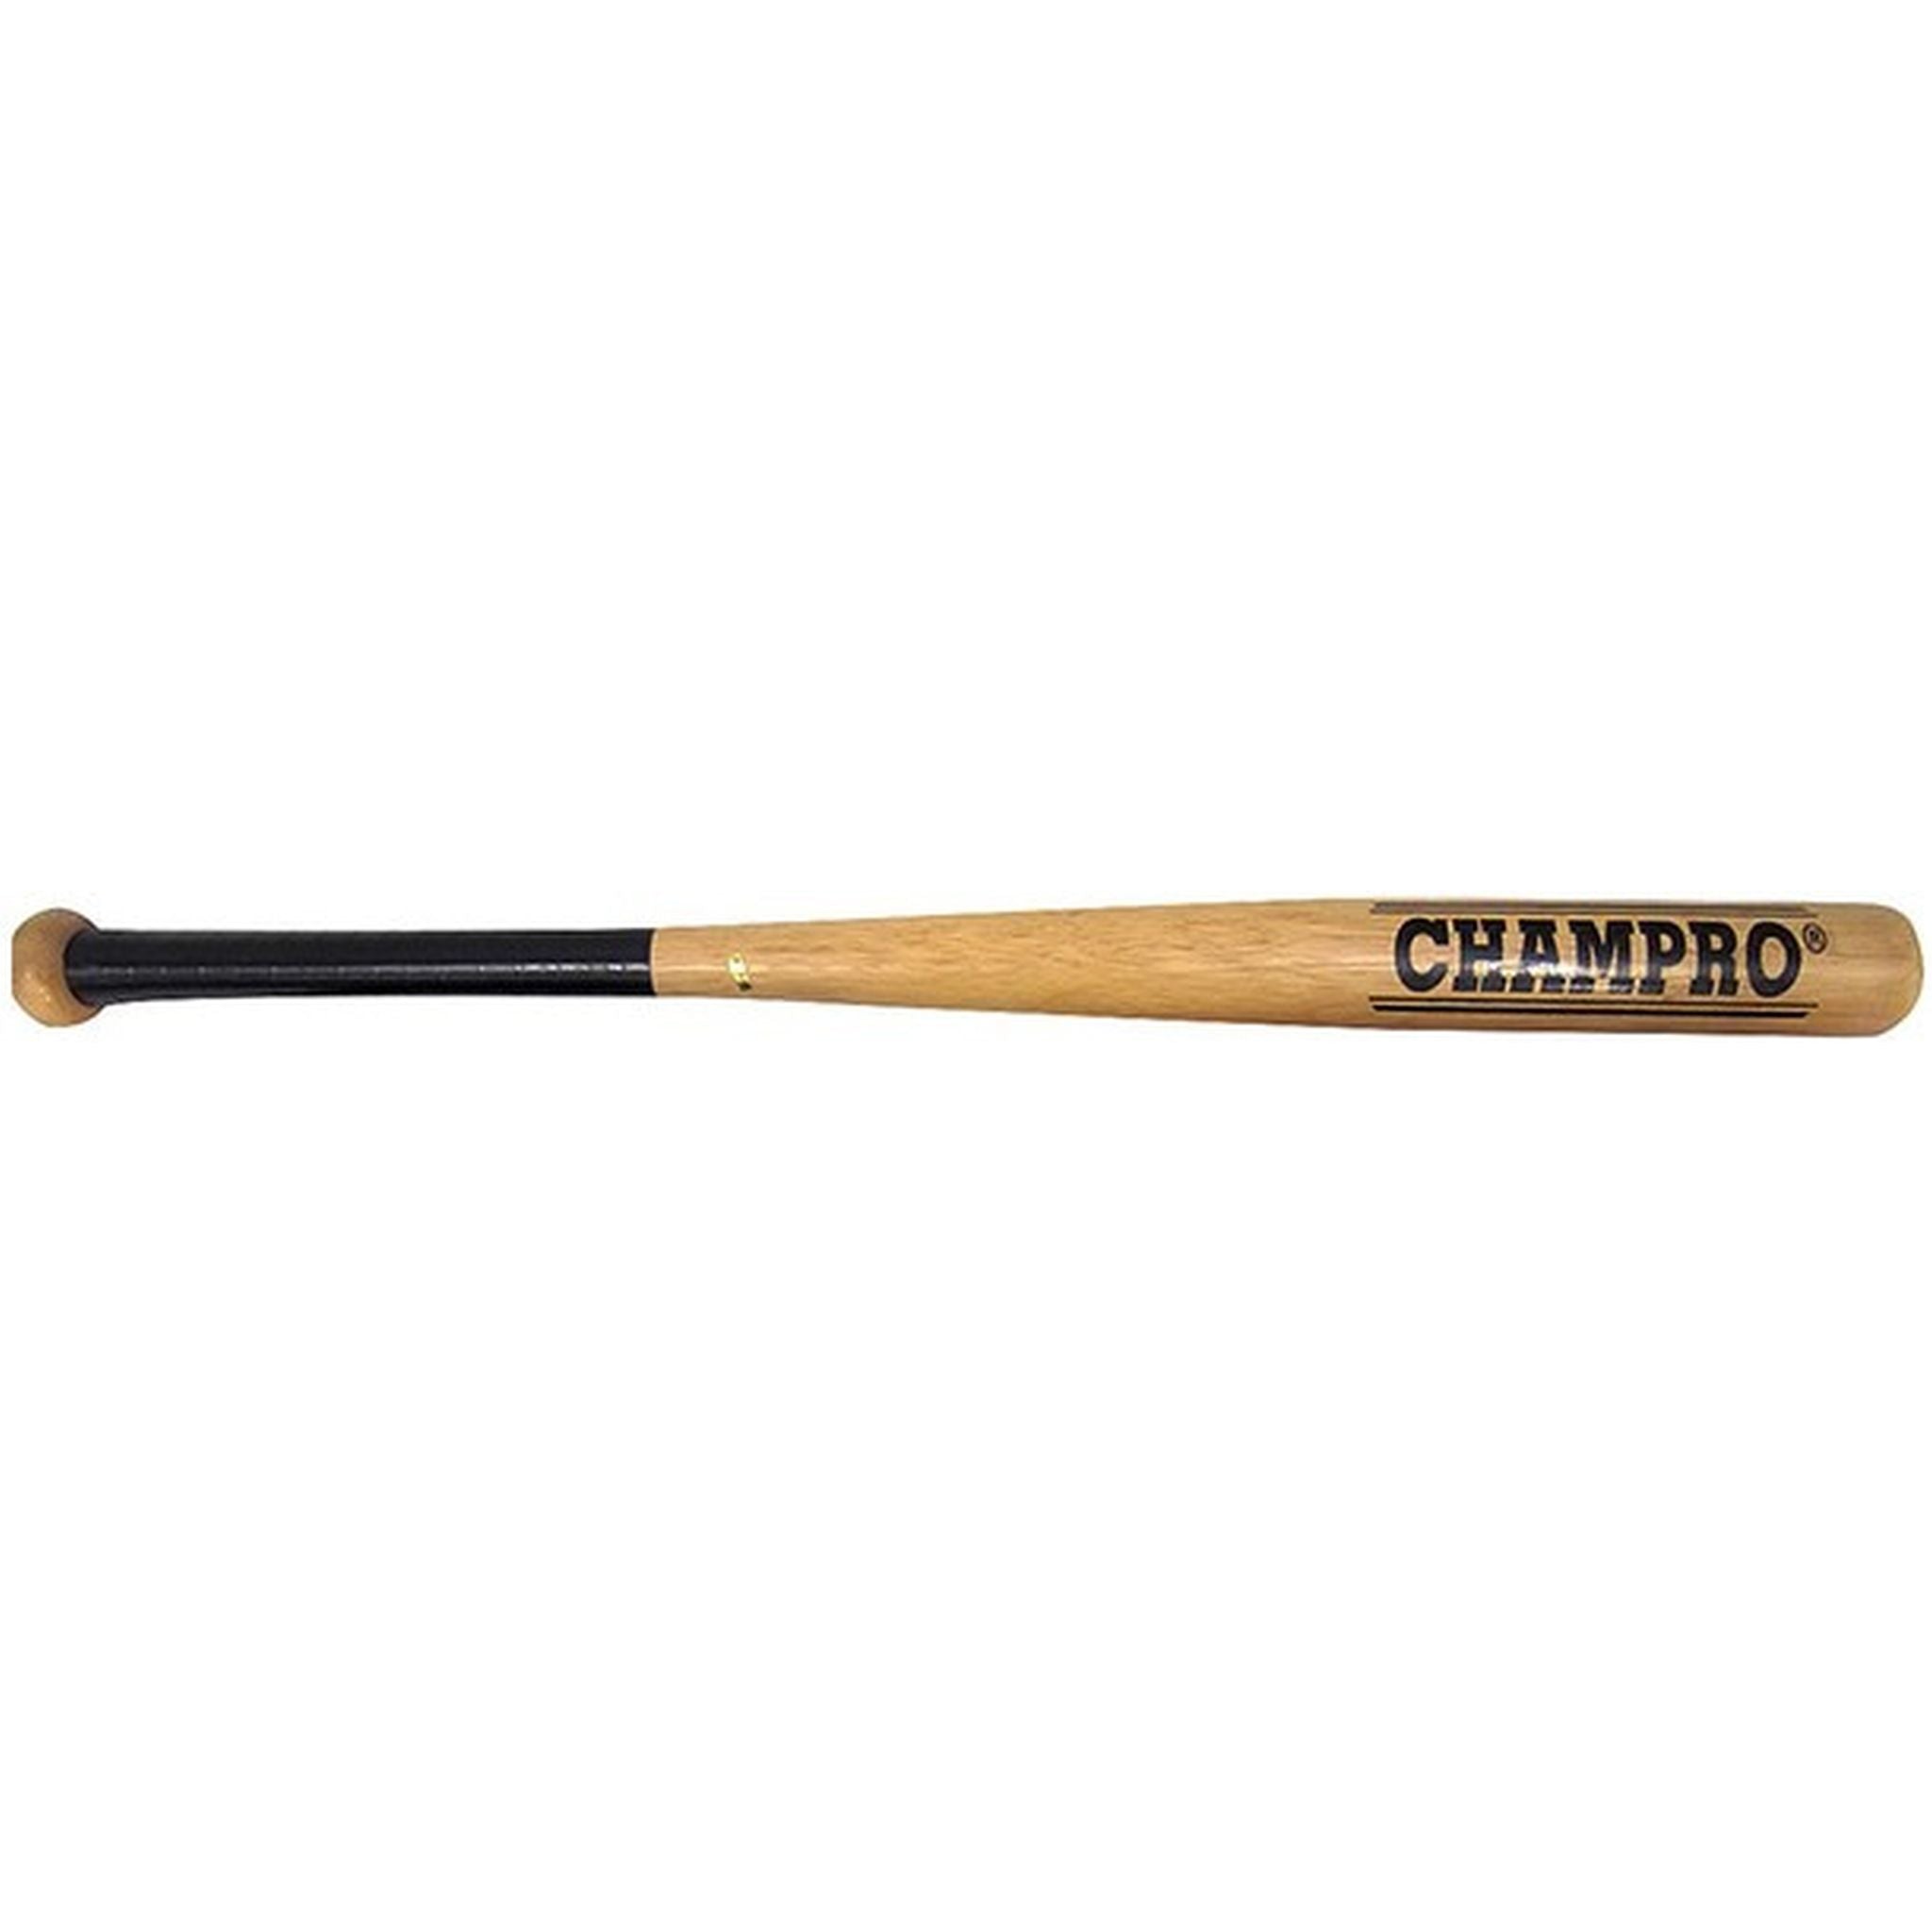 Champro Wood 24-inch Teeball Bat